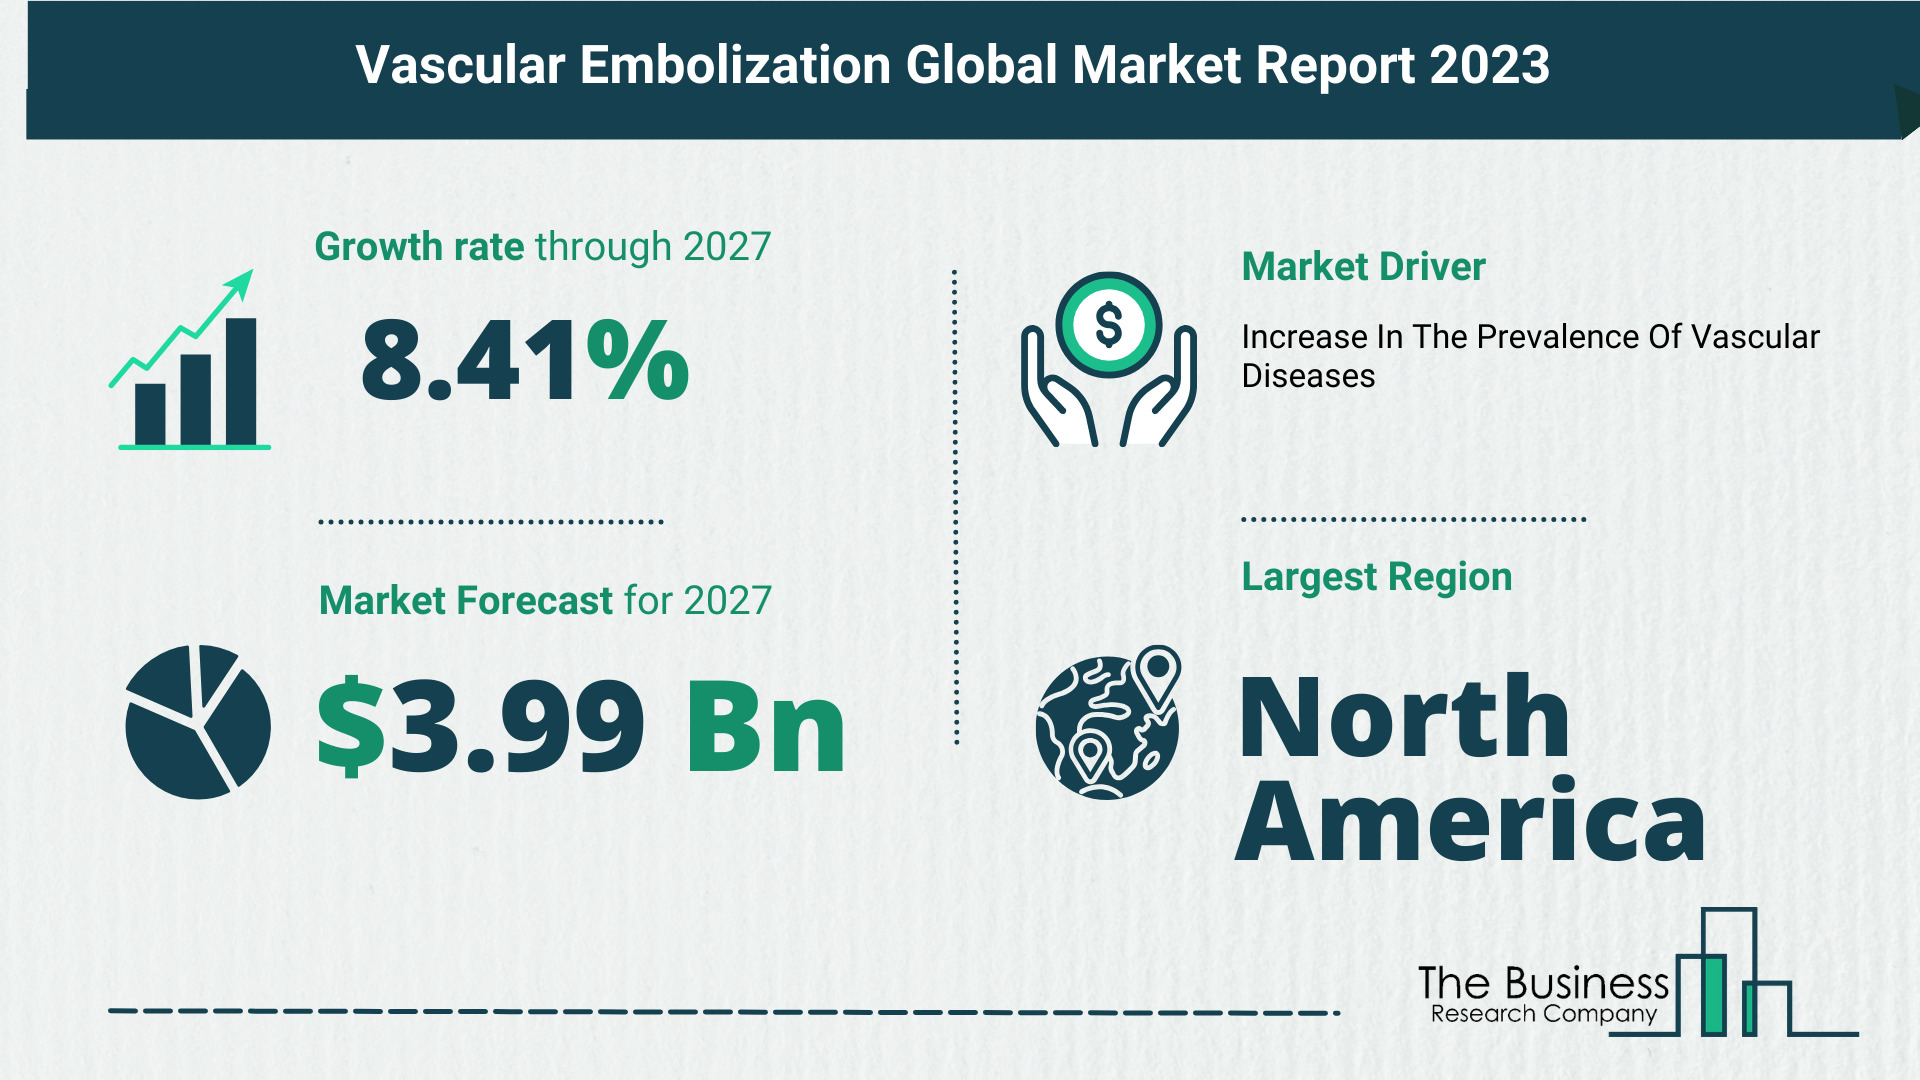 5 Key Insights On The Vascular Embolization Market 2023